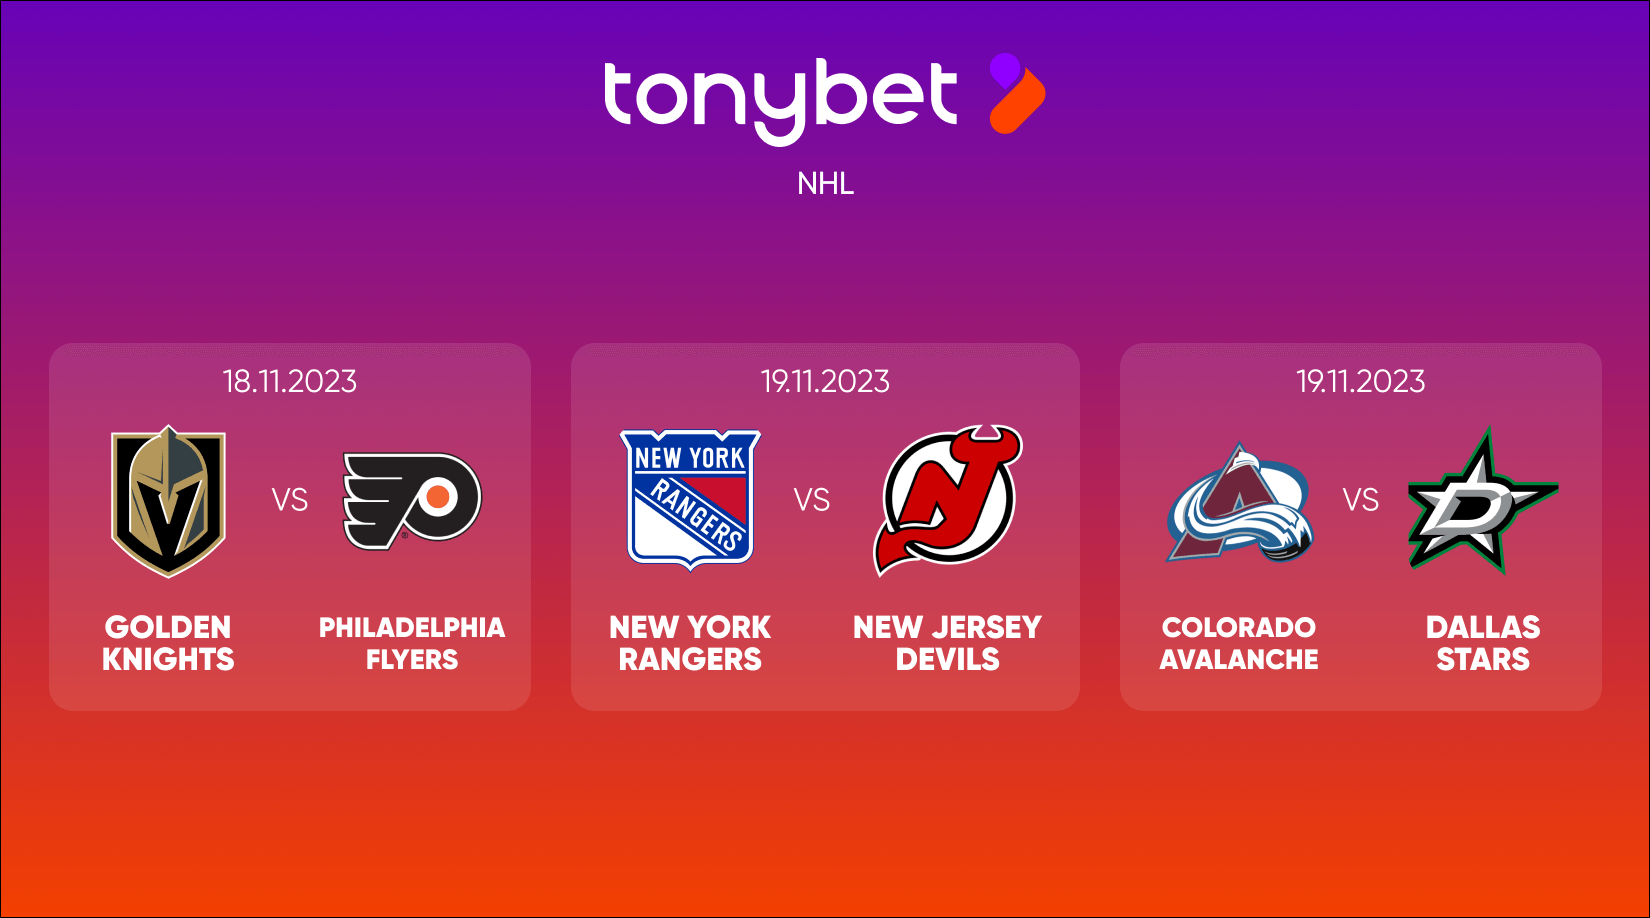 NHL Weekly predictions. Golden Knights vs Flyers, Rangers vs Devils, Avalanche vs Stars